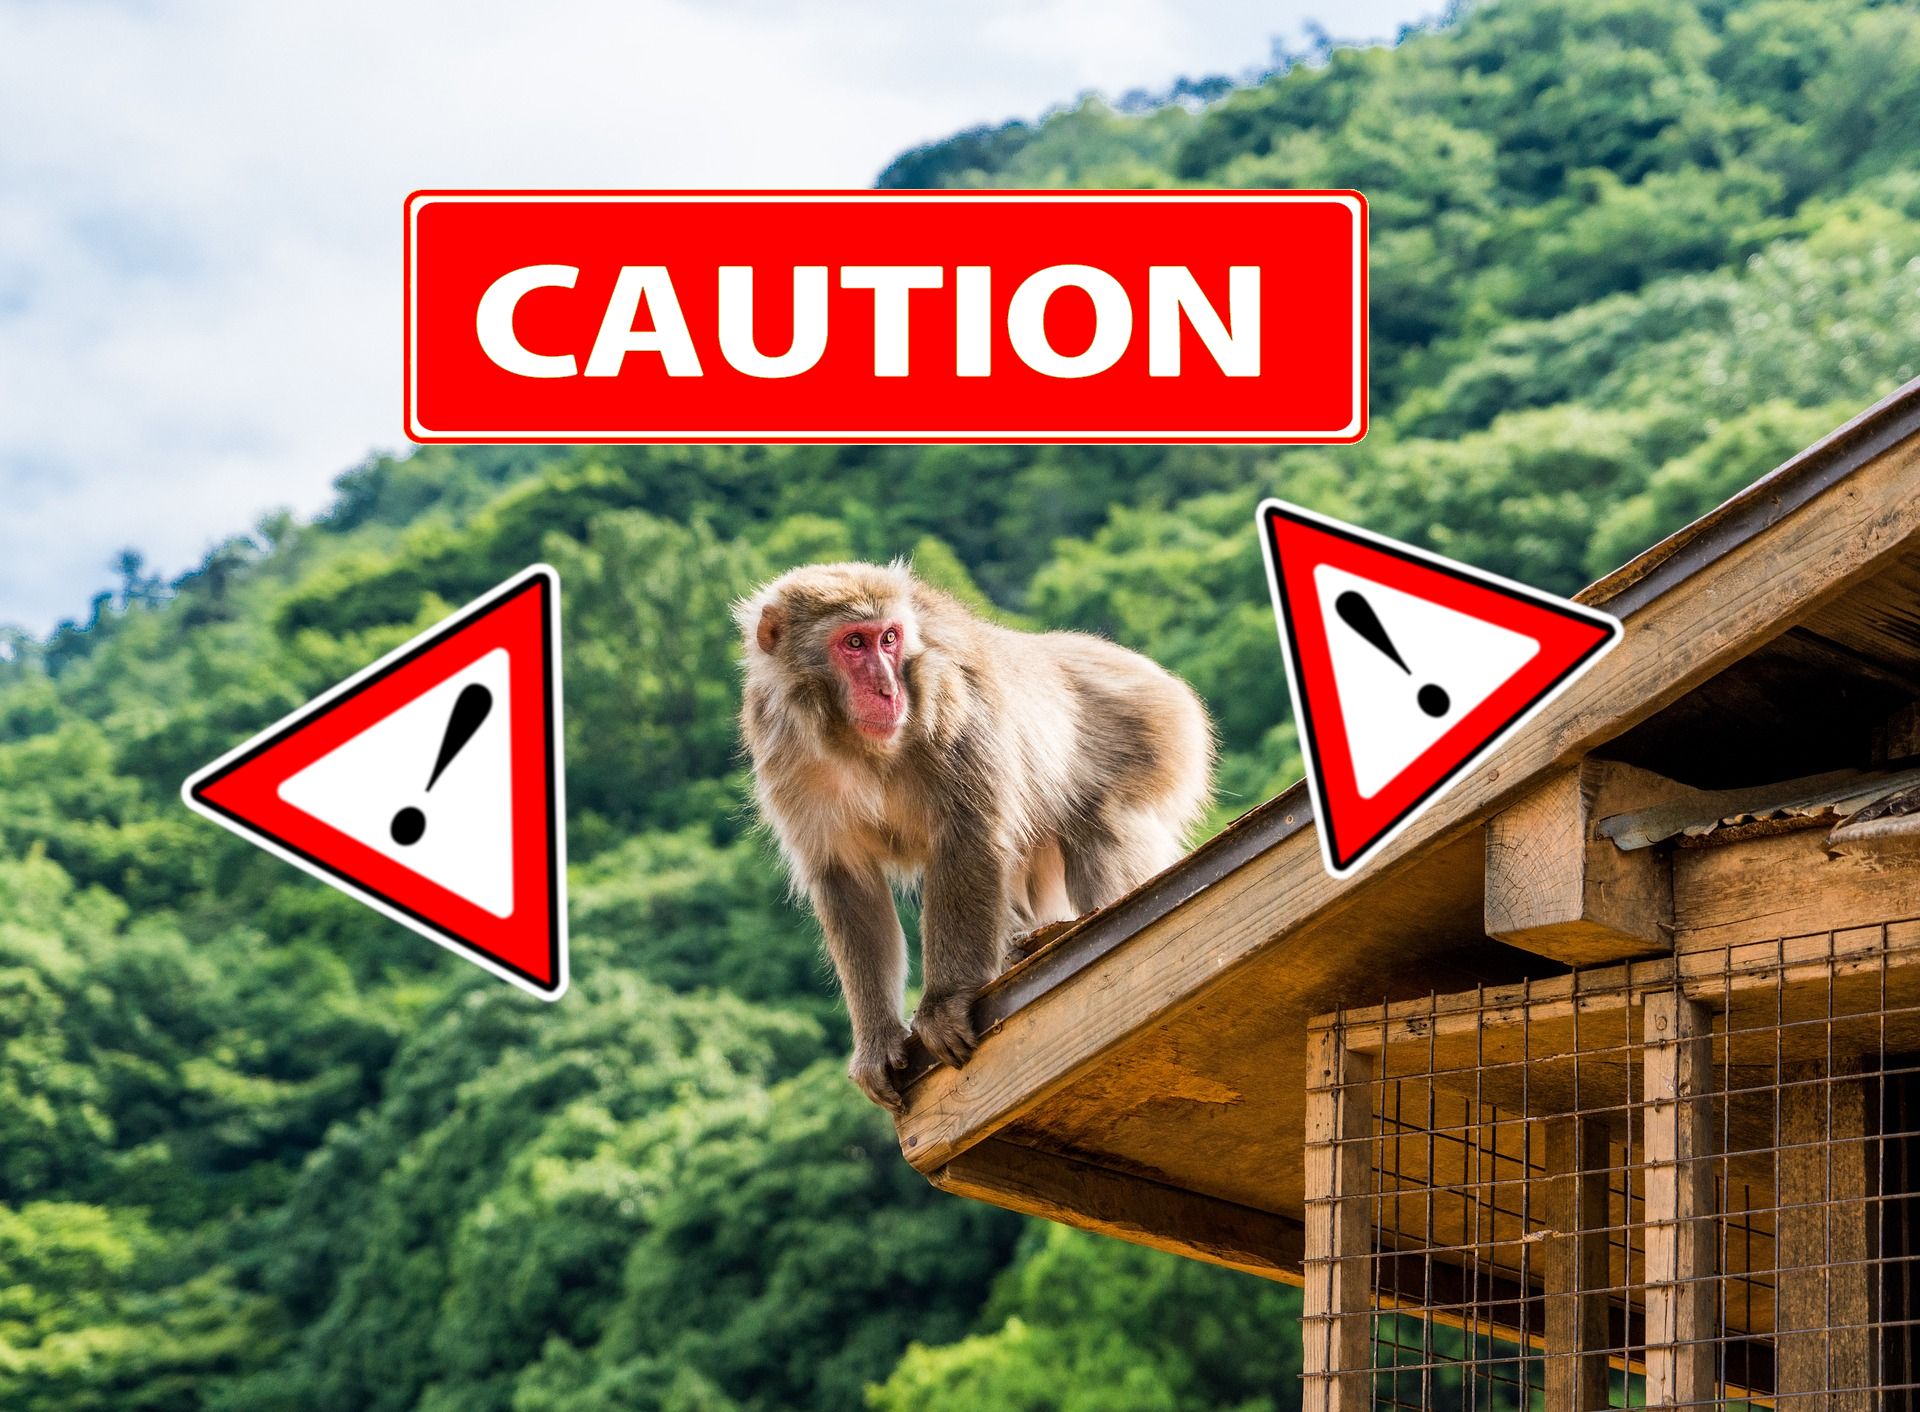 Ataques de monos a turistas en Kioto